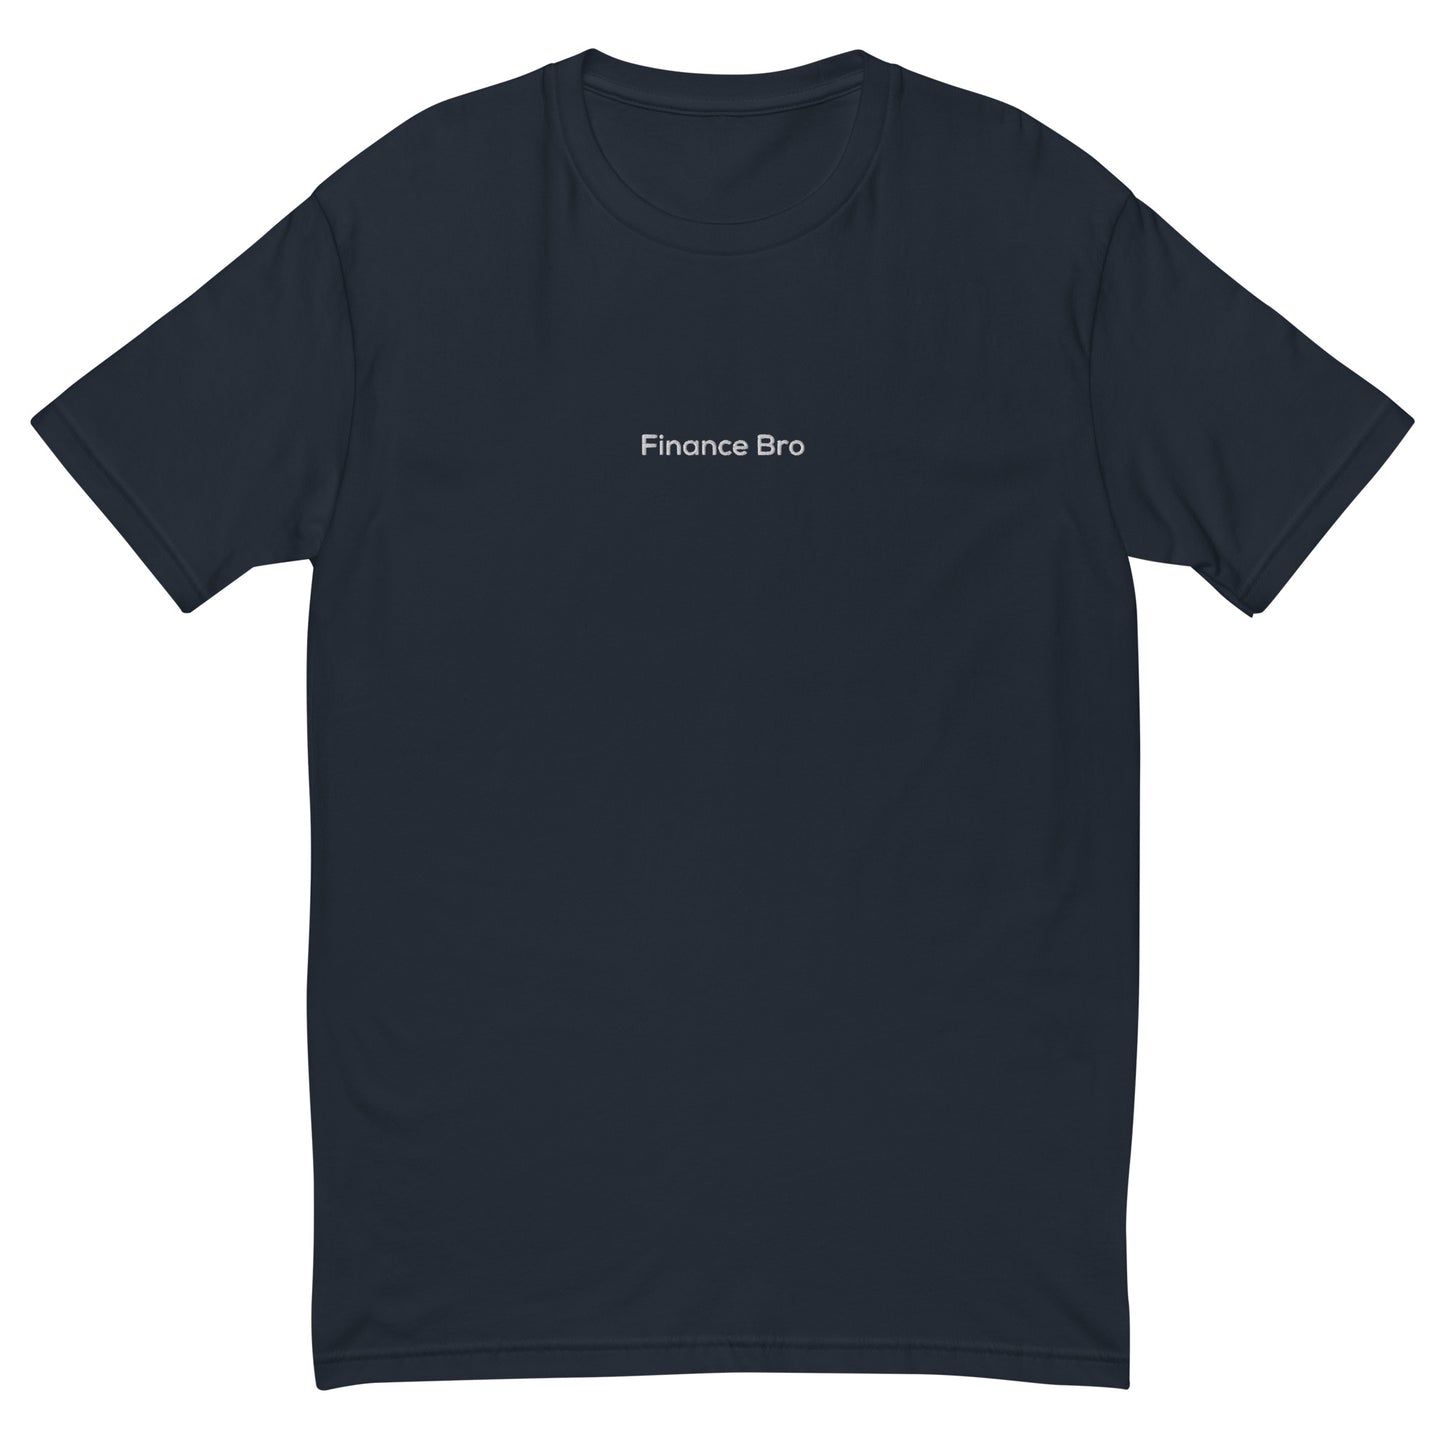 Finance Bro T-shirt